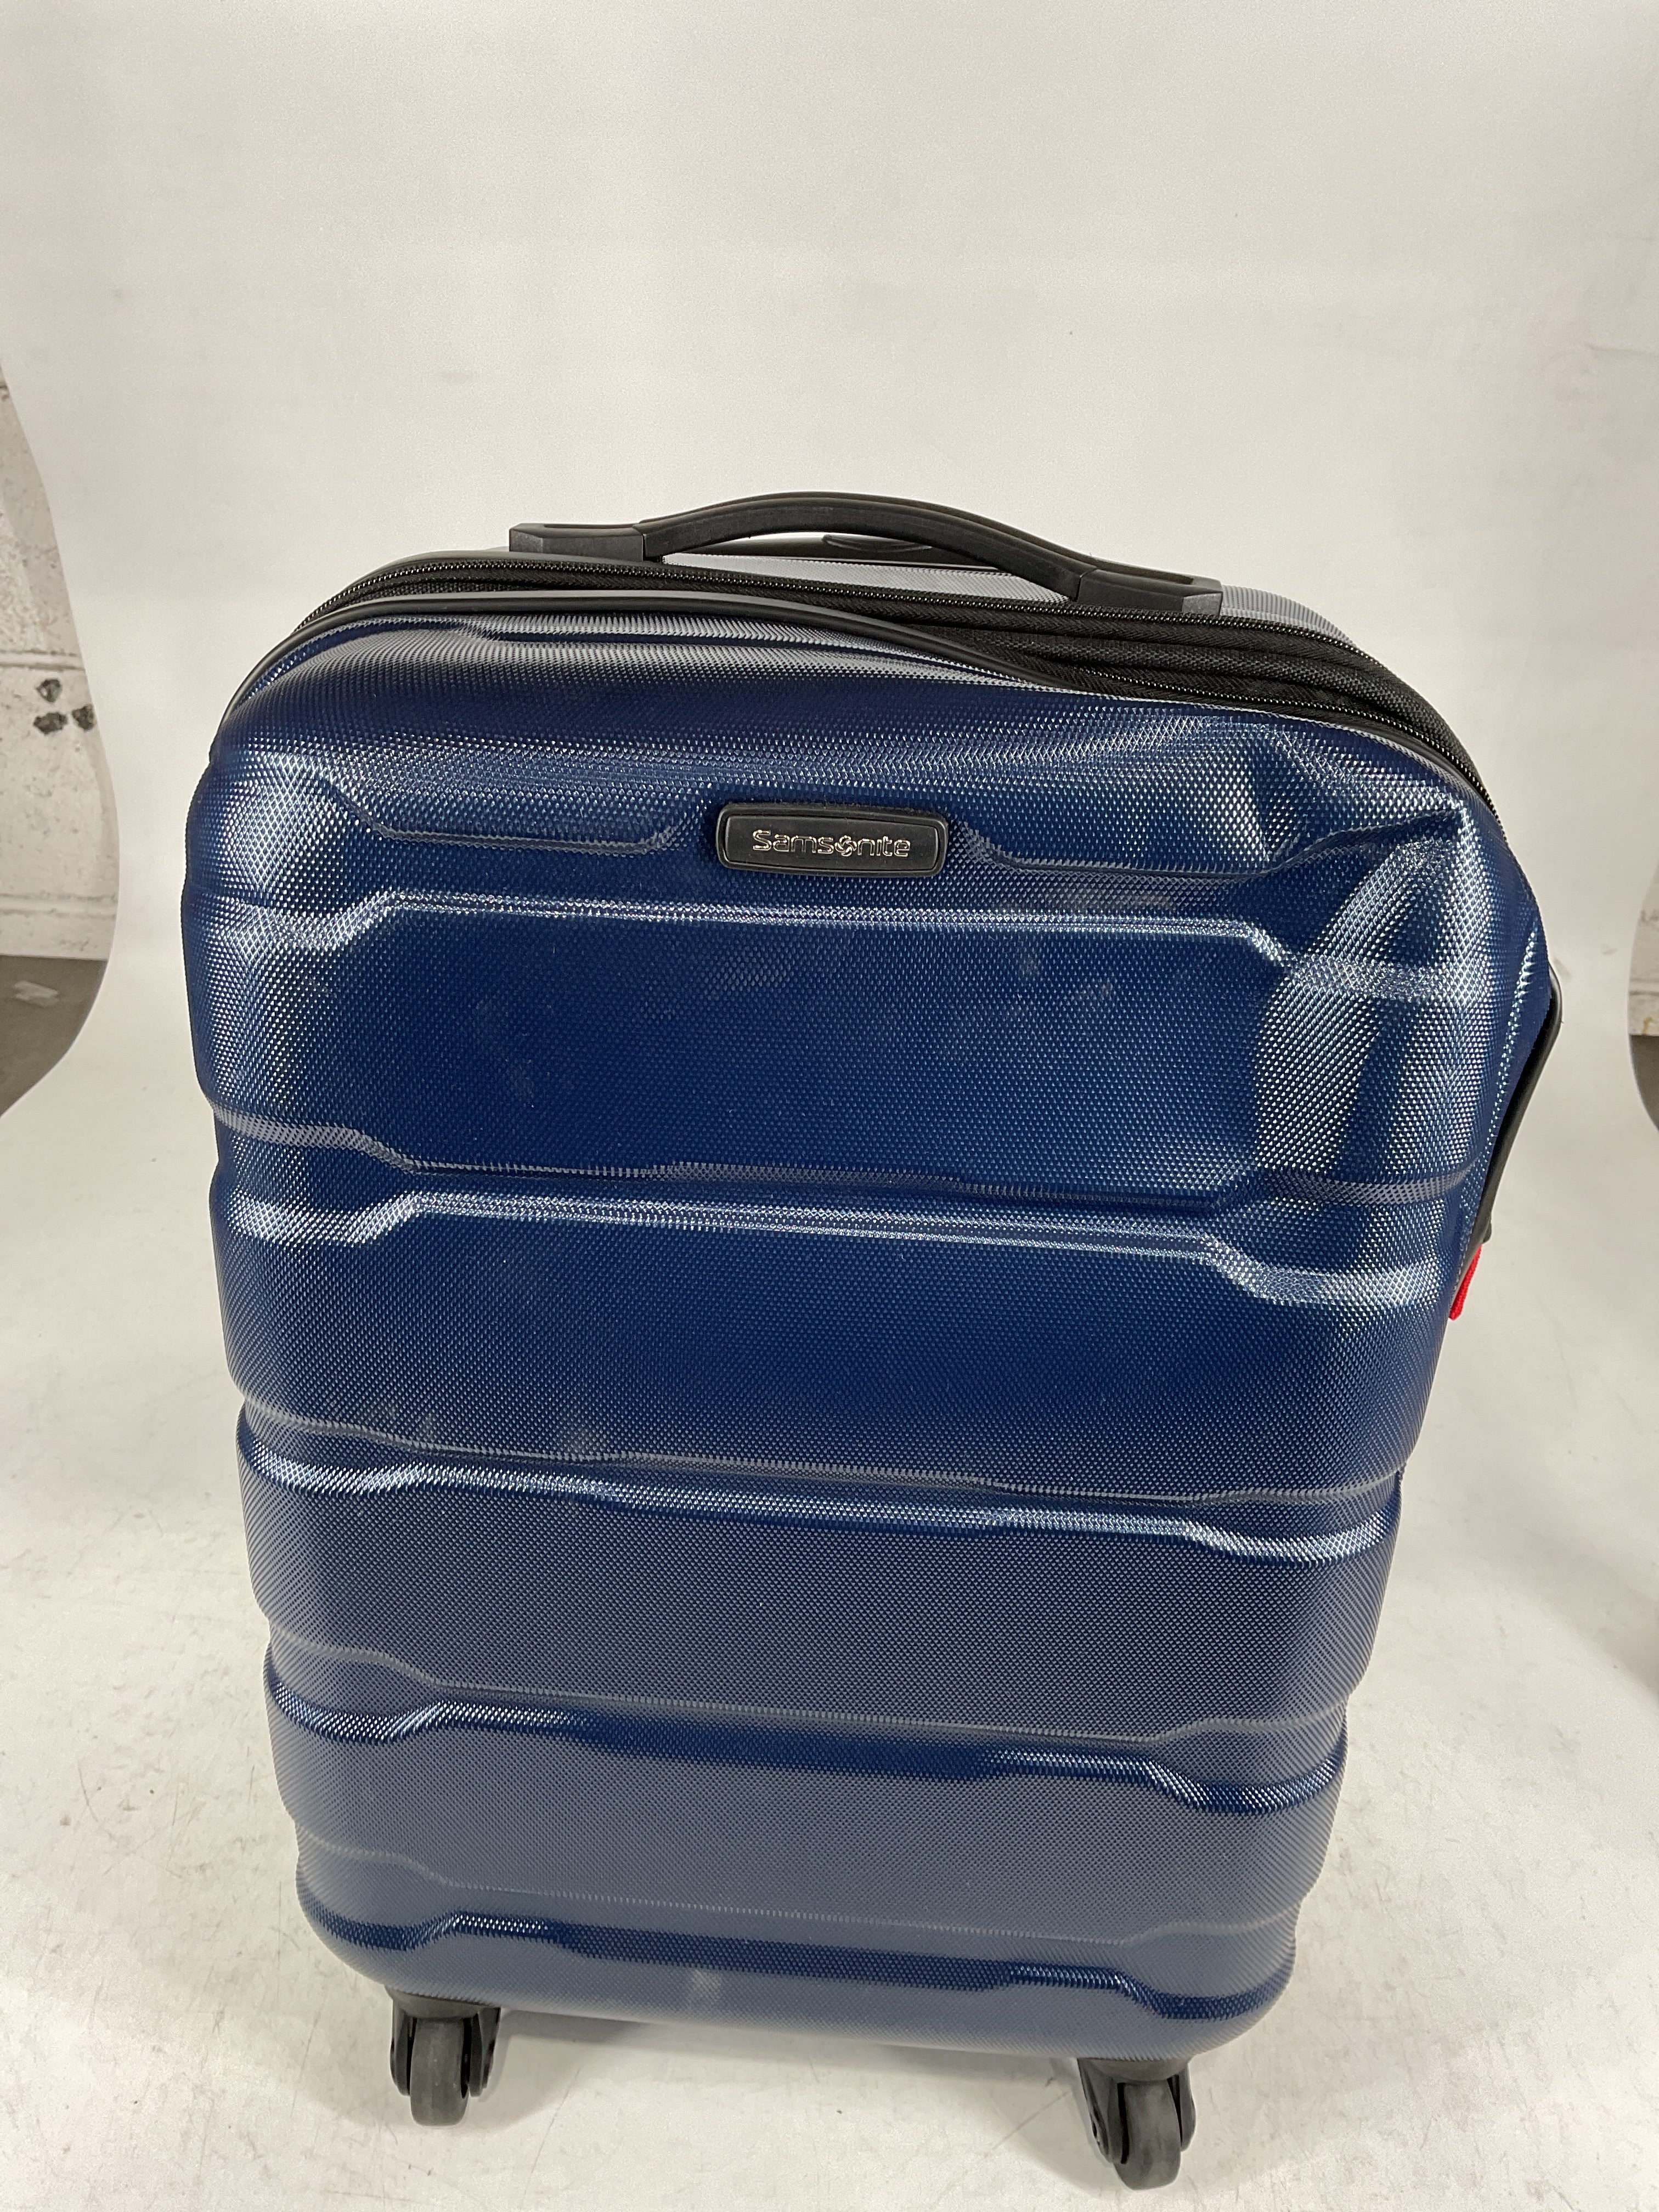 Samsonite Omni Pc Hardside Expandable Luggage with Spinner Wheels U14